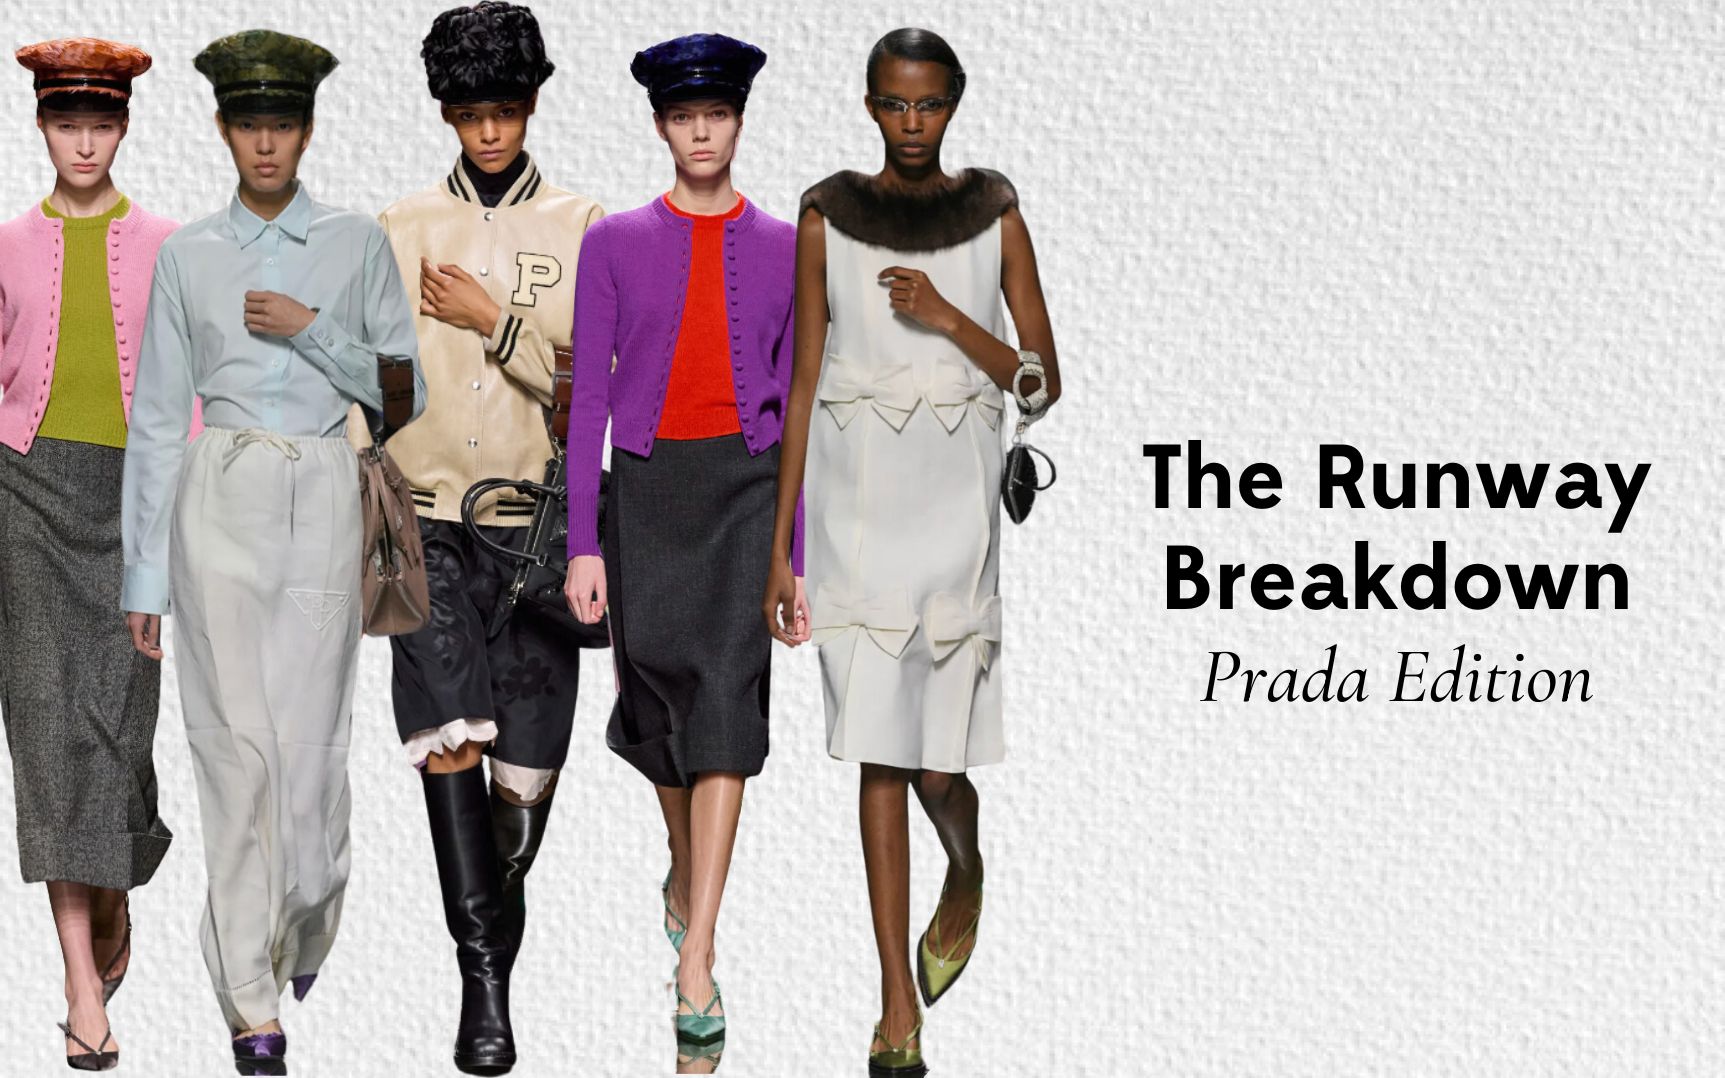 The Runway Breakdown: Prada Edition